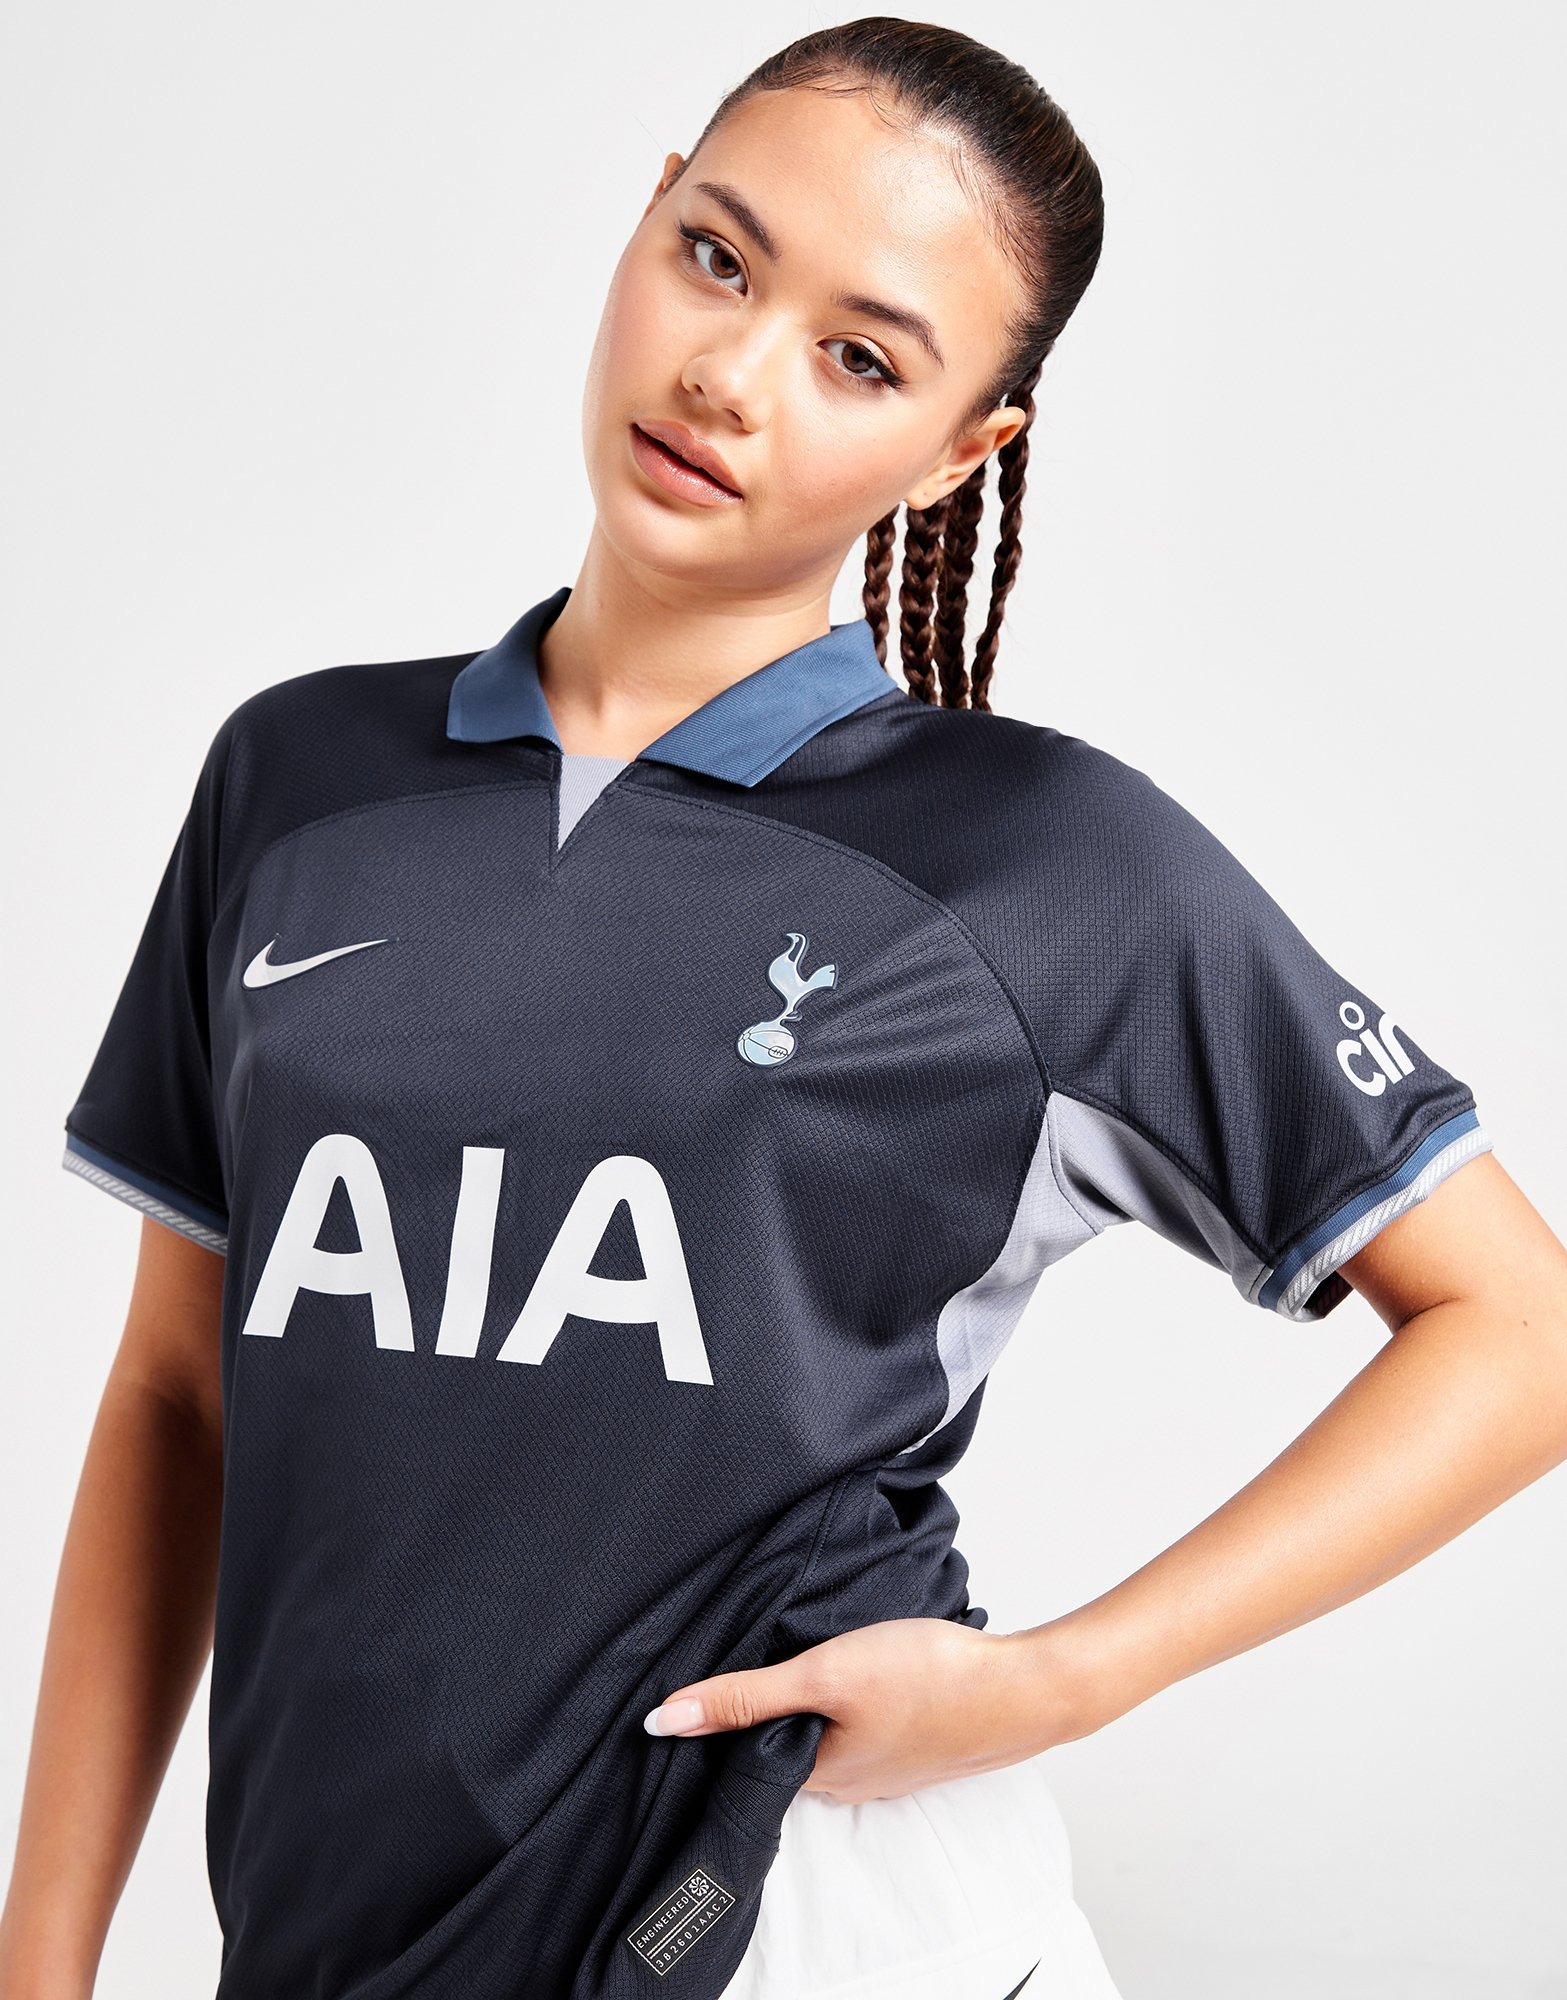 Tottenham Hotspur 15/16 Under Armour Third Kit - Football Shirt Culture -  Latest Football Kit News and More